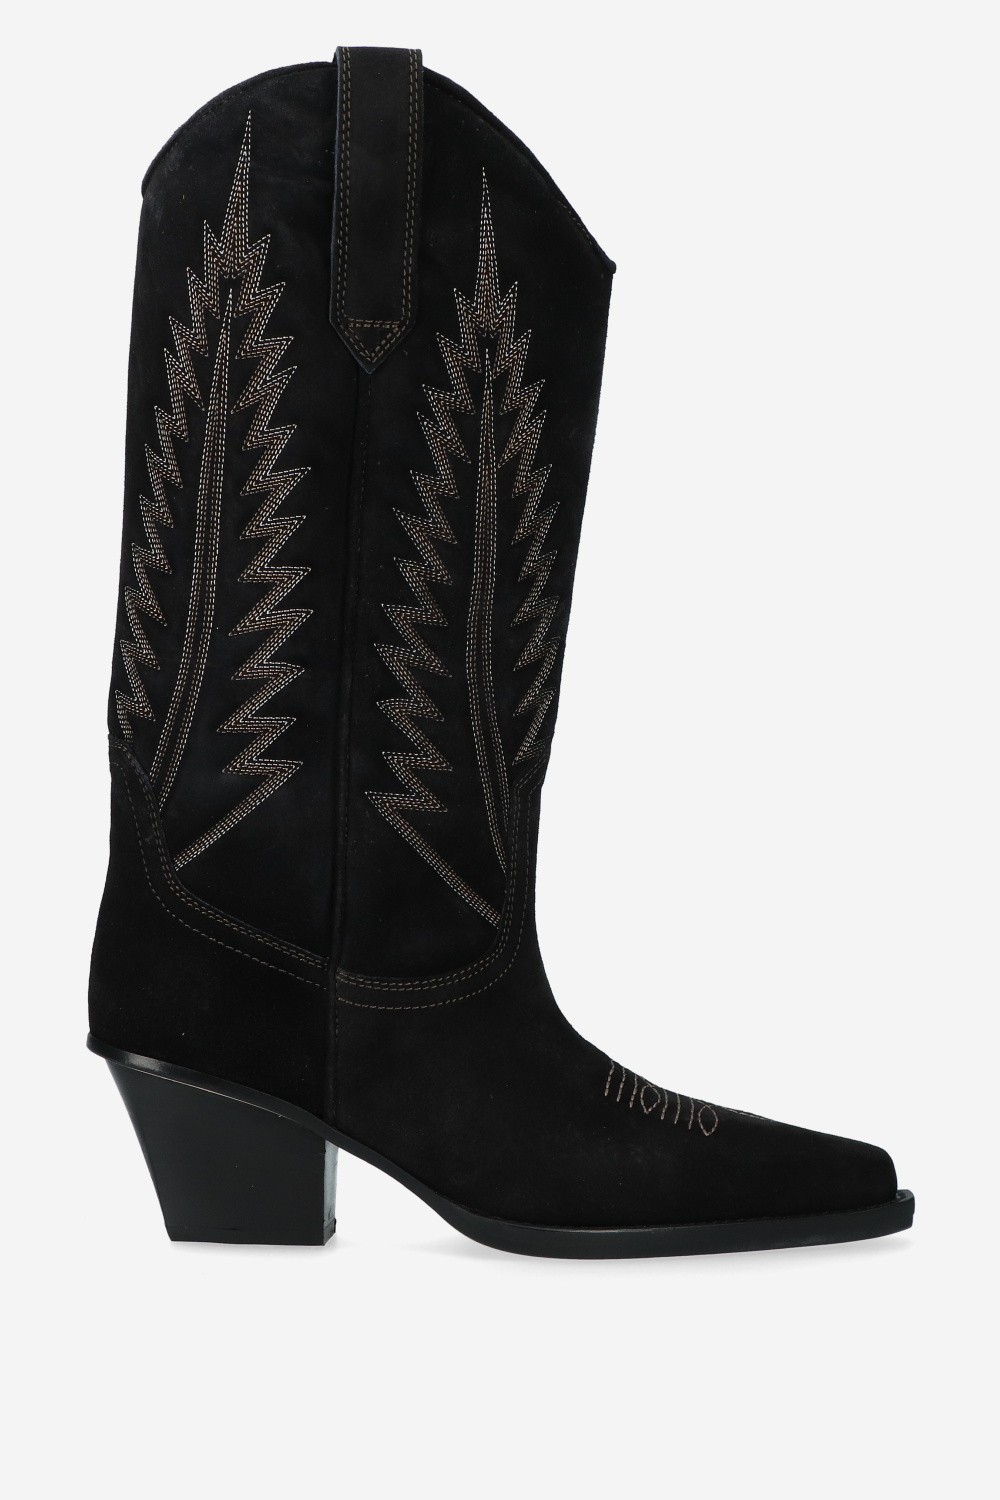 Paris Texas Boots Black